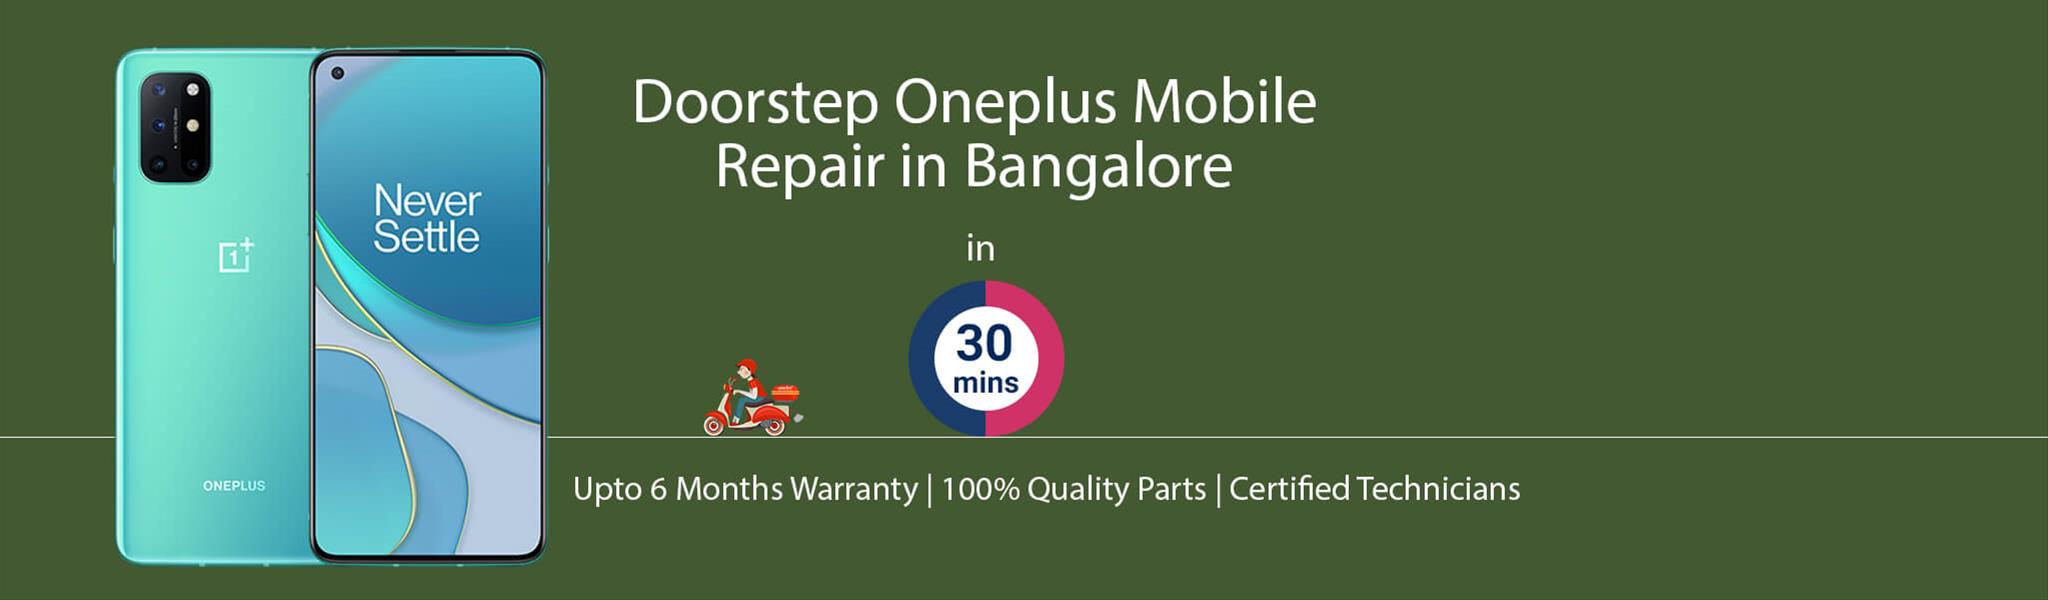 oneplus-repair-service-banner-bangalore.jpg